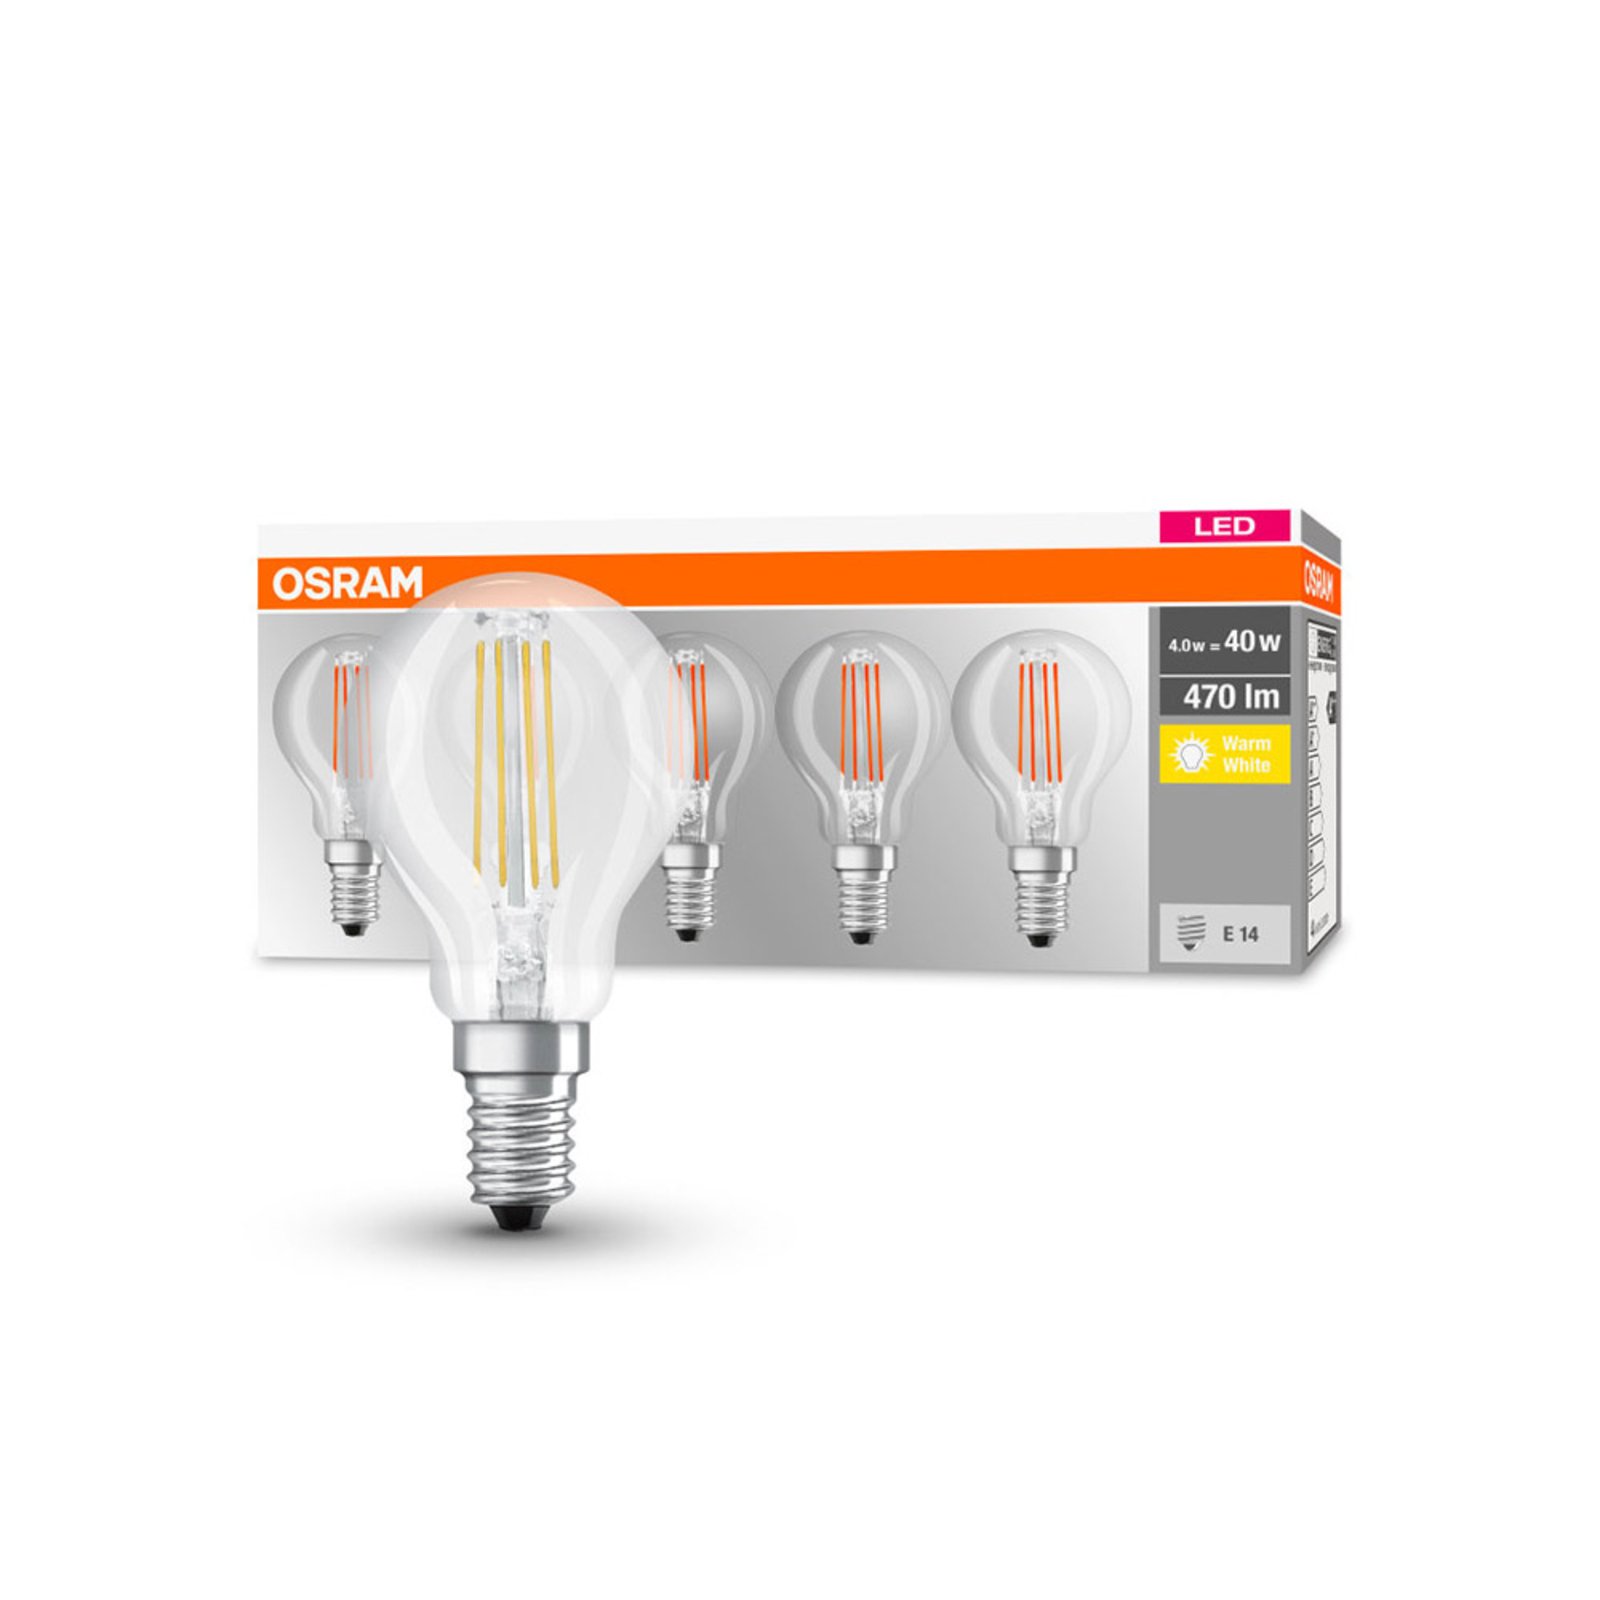 OSRAM LED lamp E14 P40 4W filament 827 470lm per 5